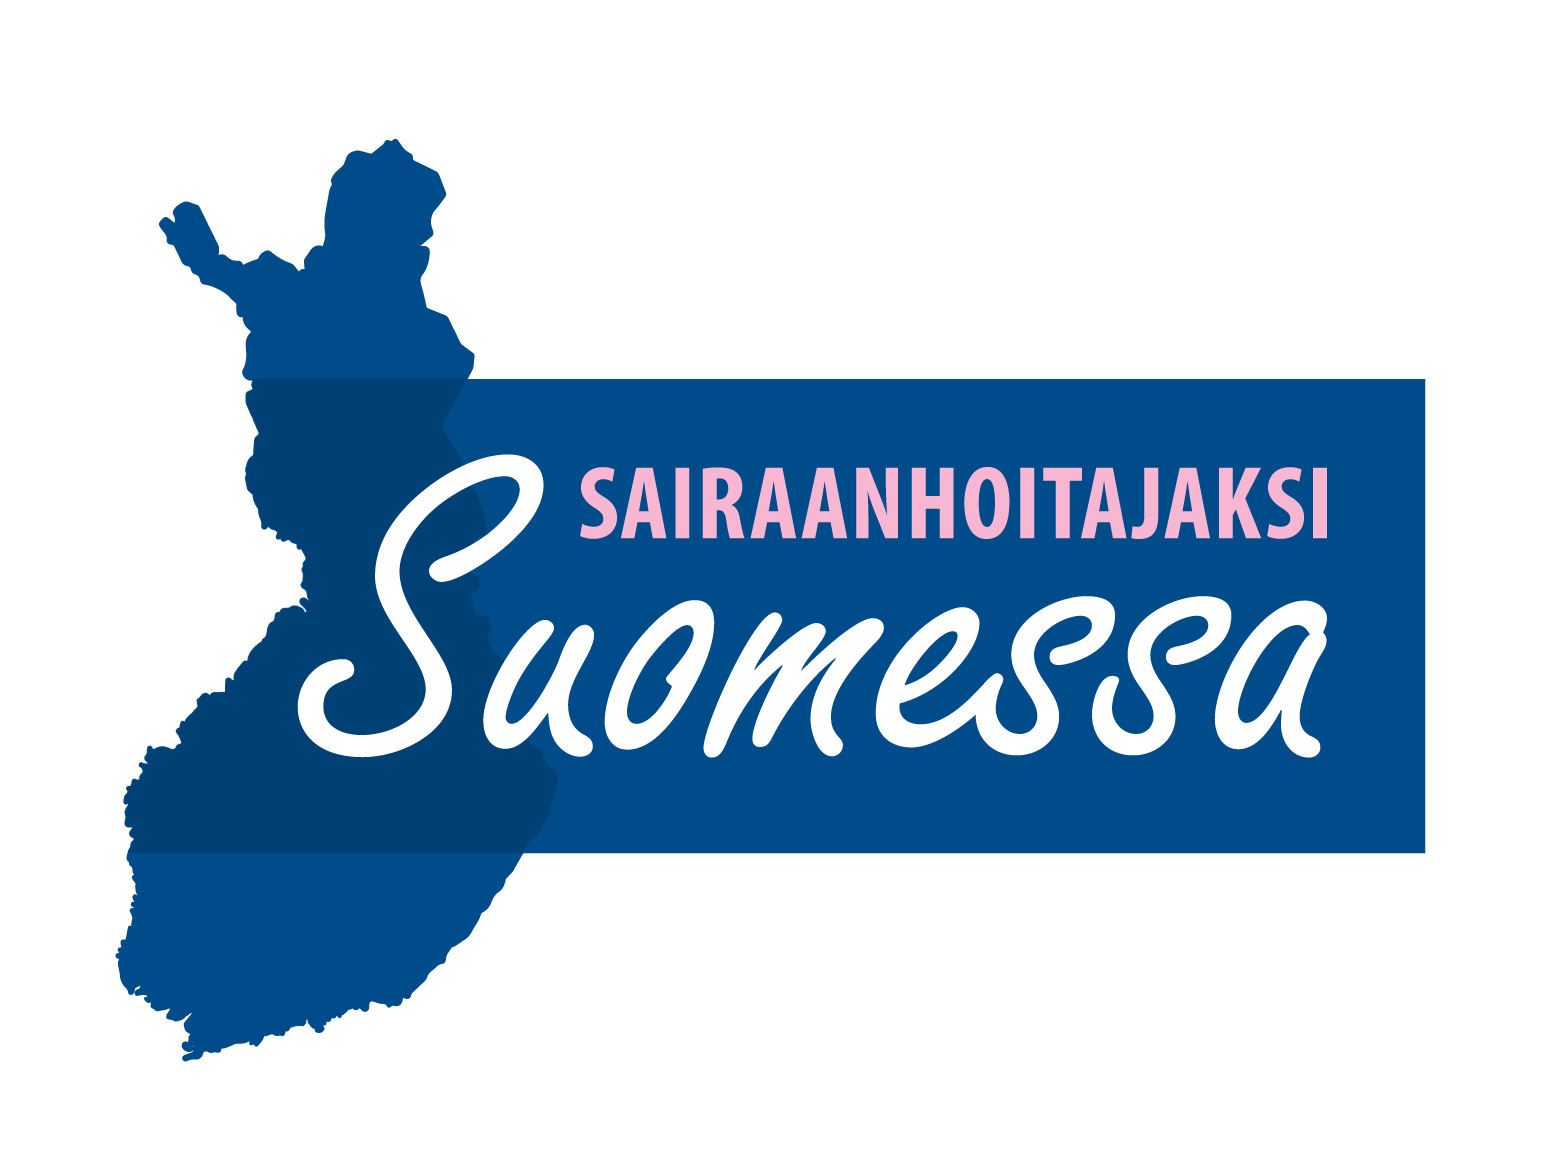 Sairaanhoitajaksi Suomessa -hankkeen logo